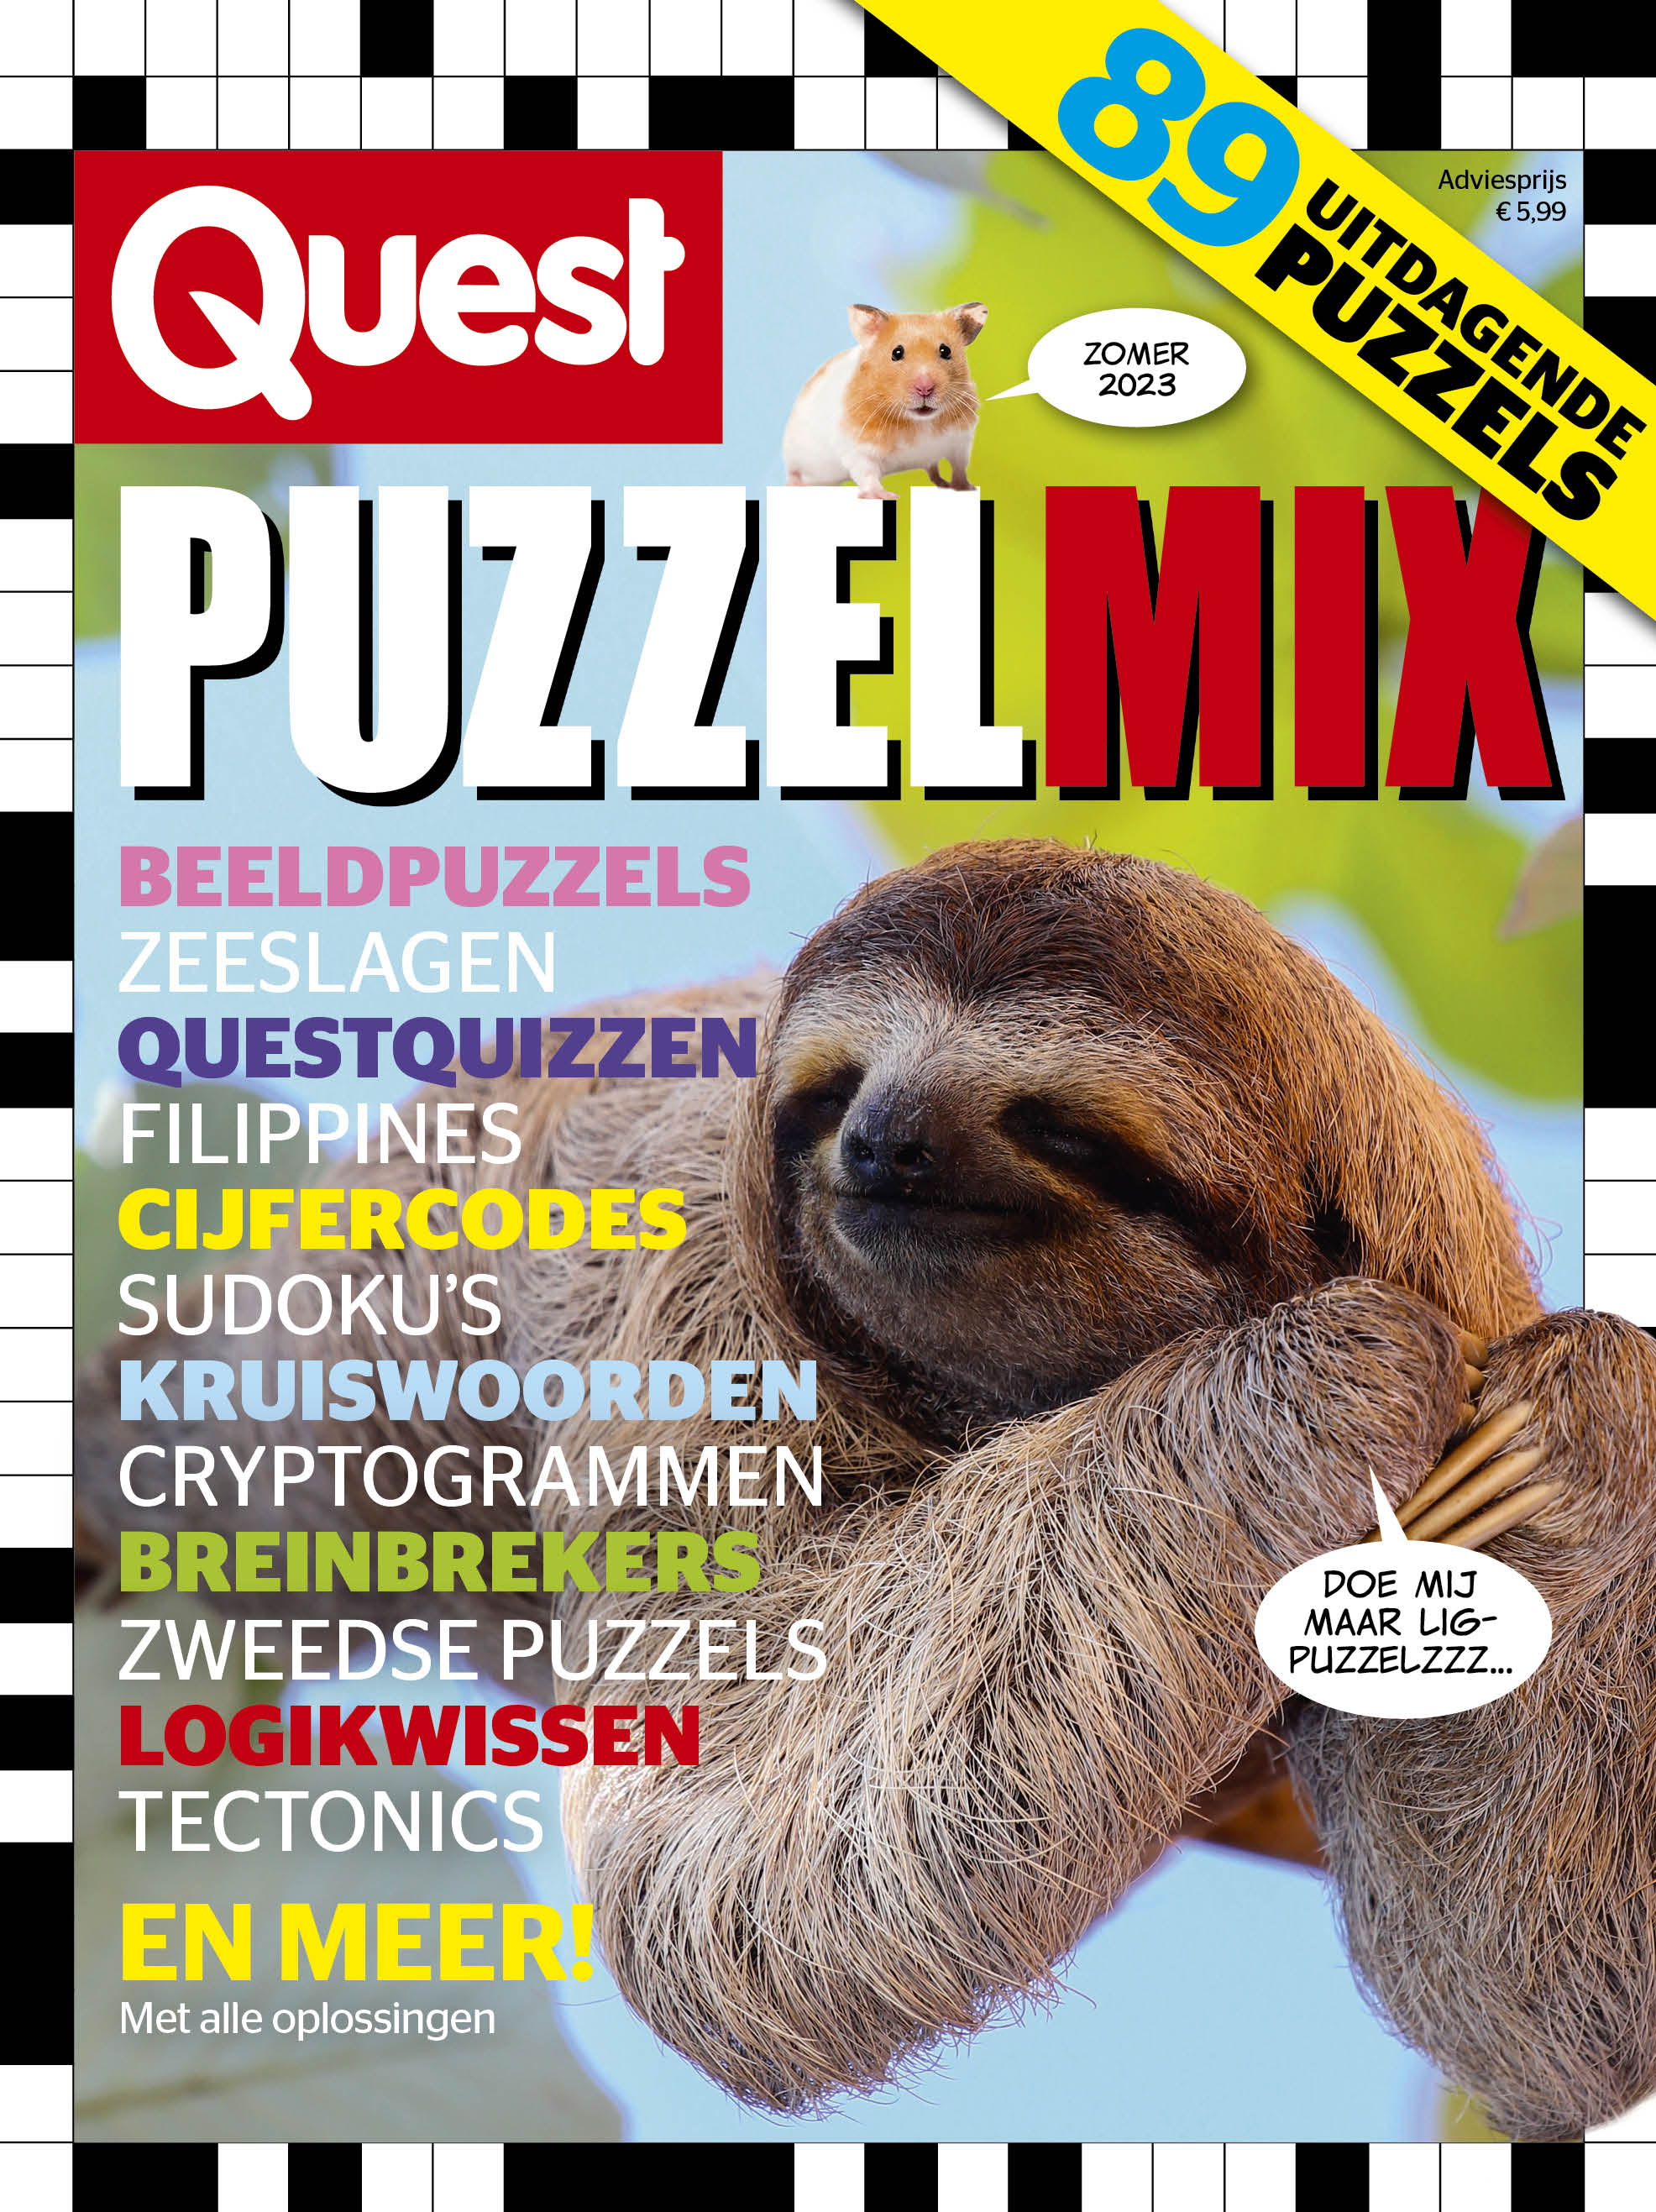 Quest Puzzelmix editie 3 2023 - tijdschrift